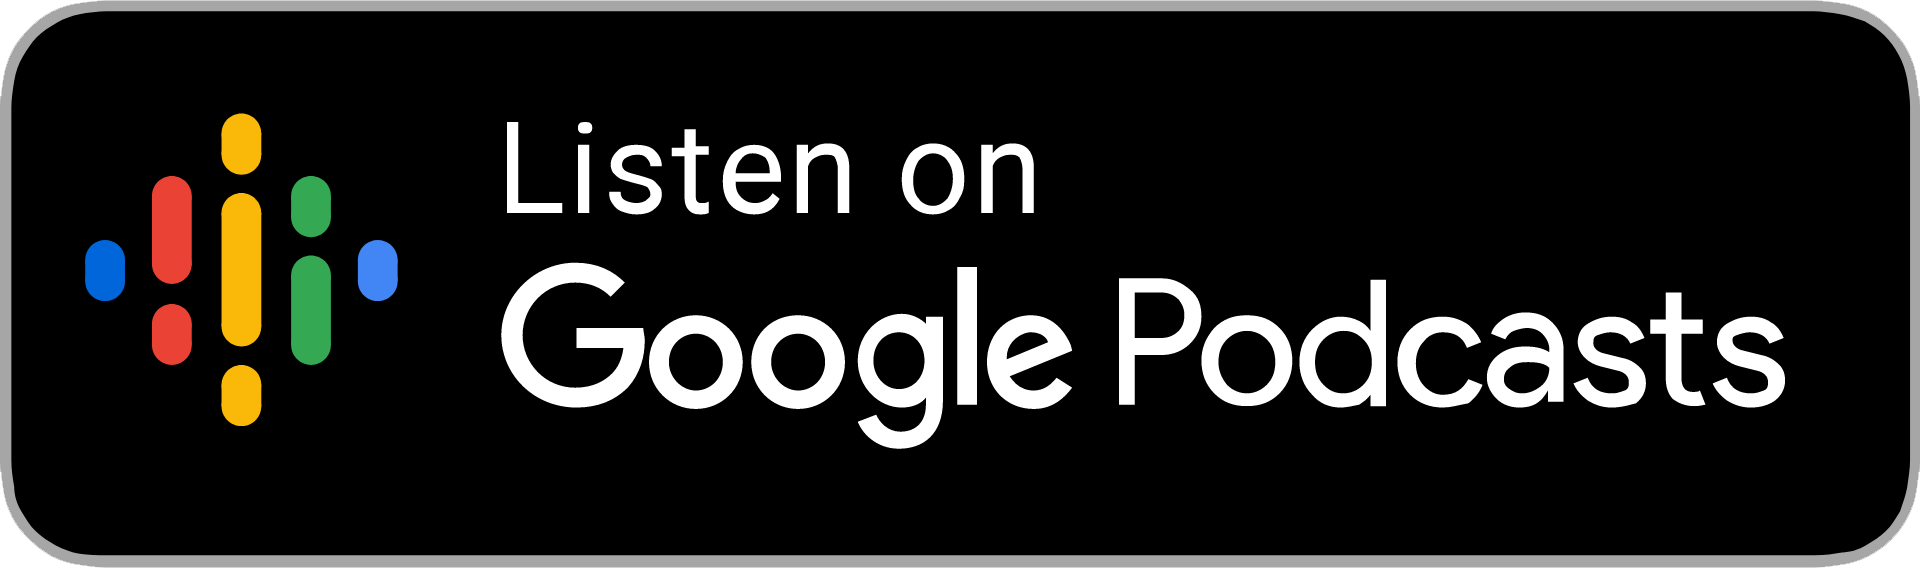 podcast badge google